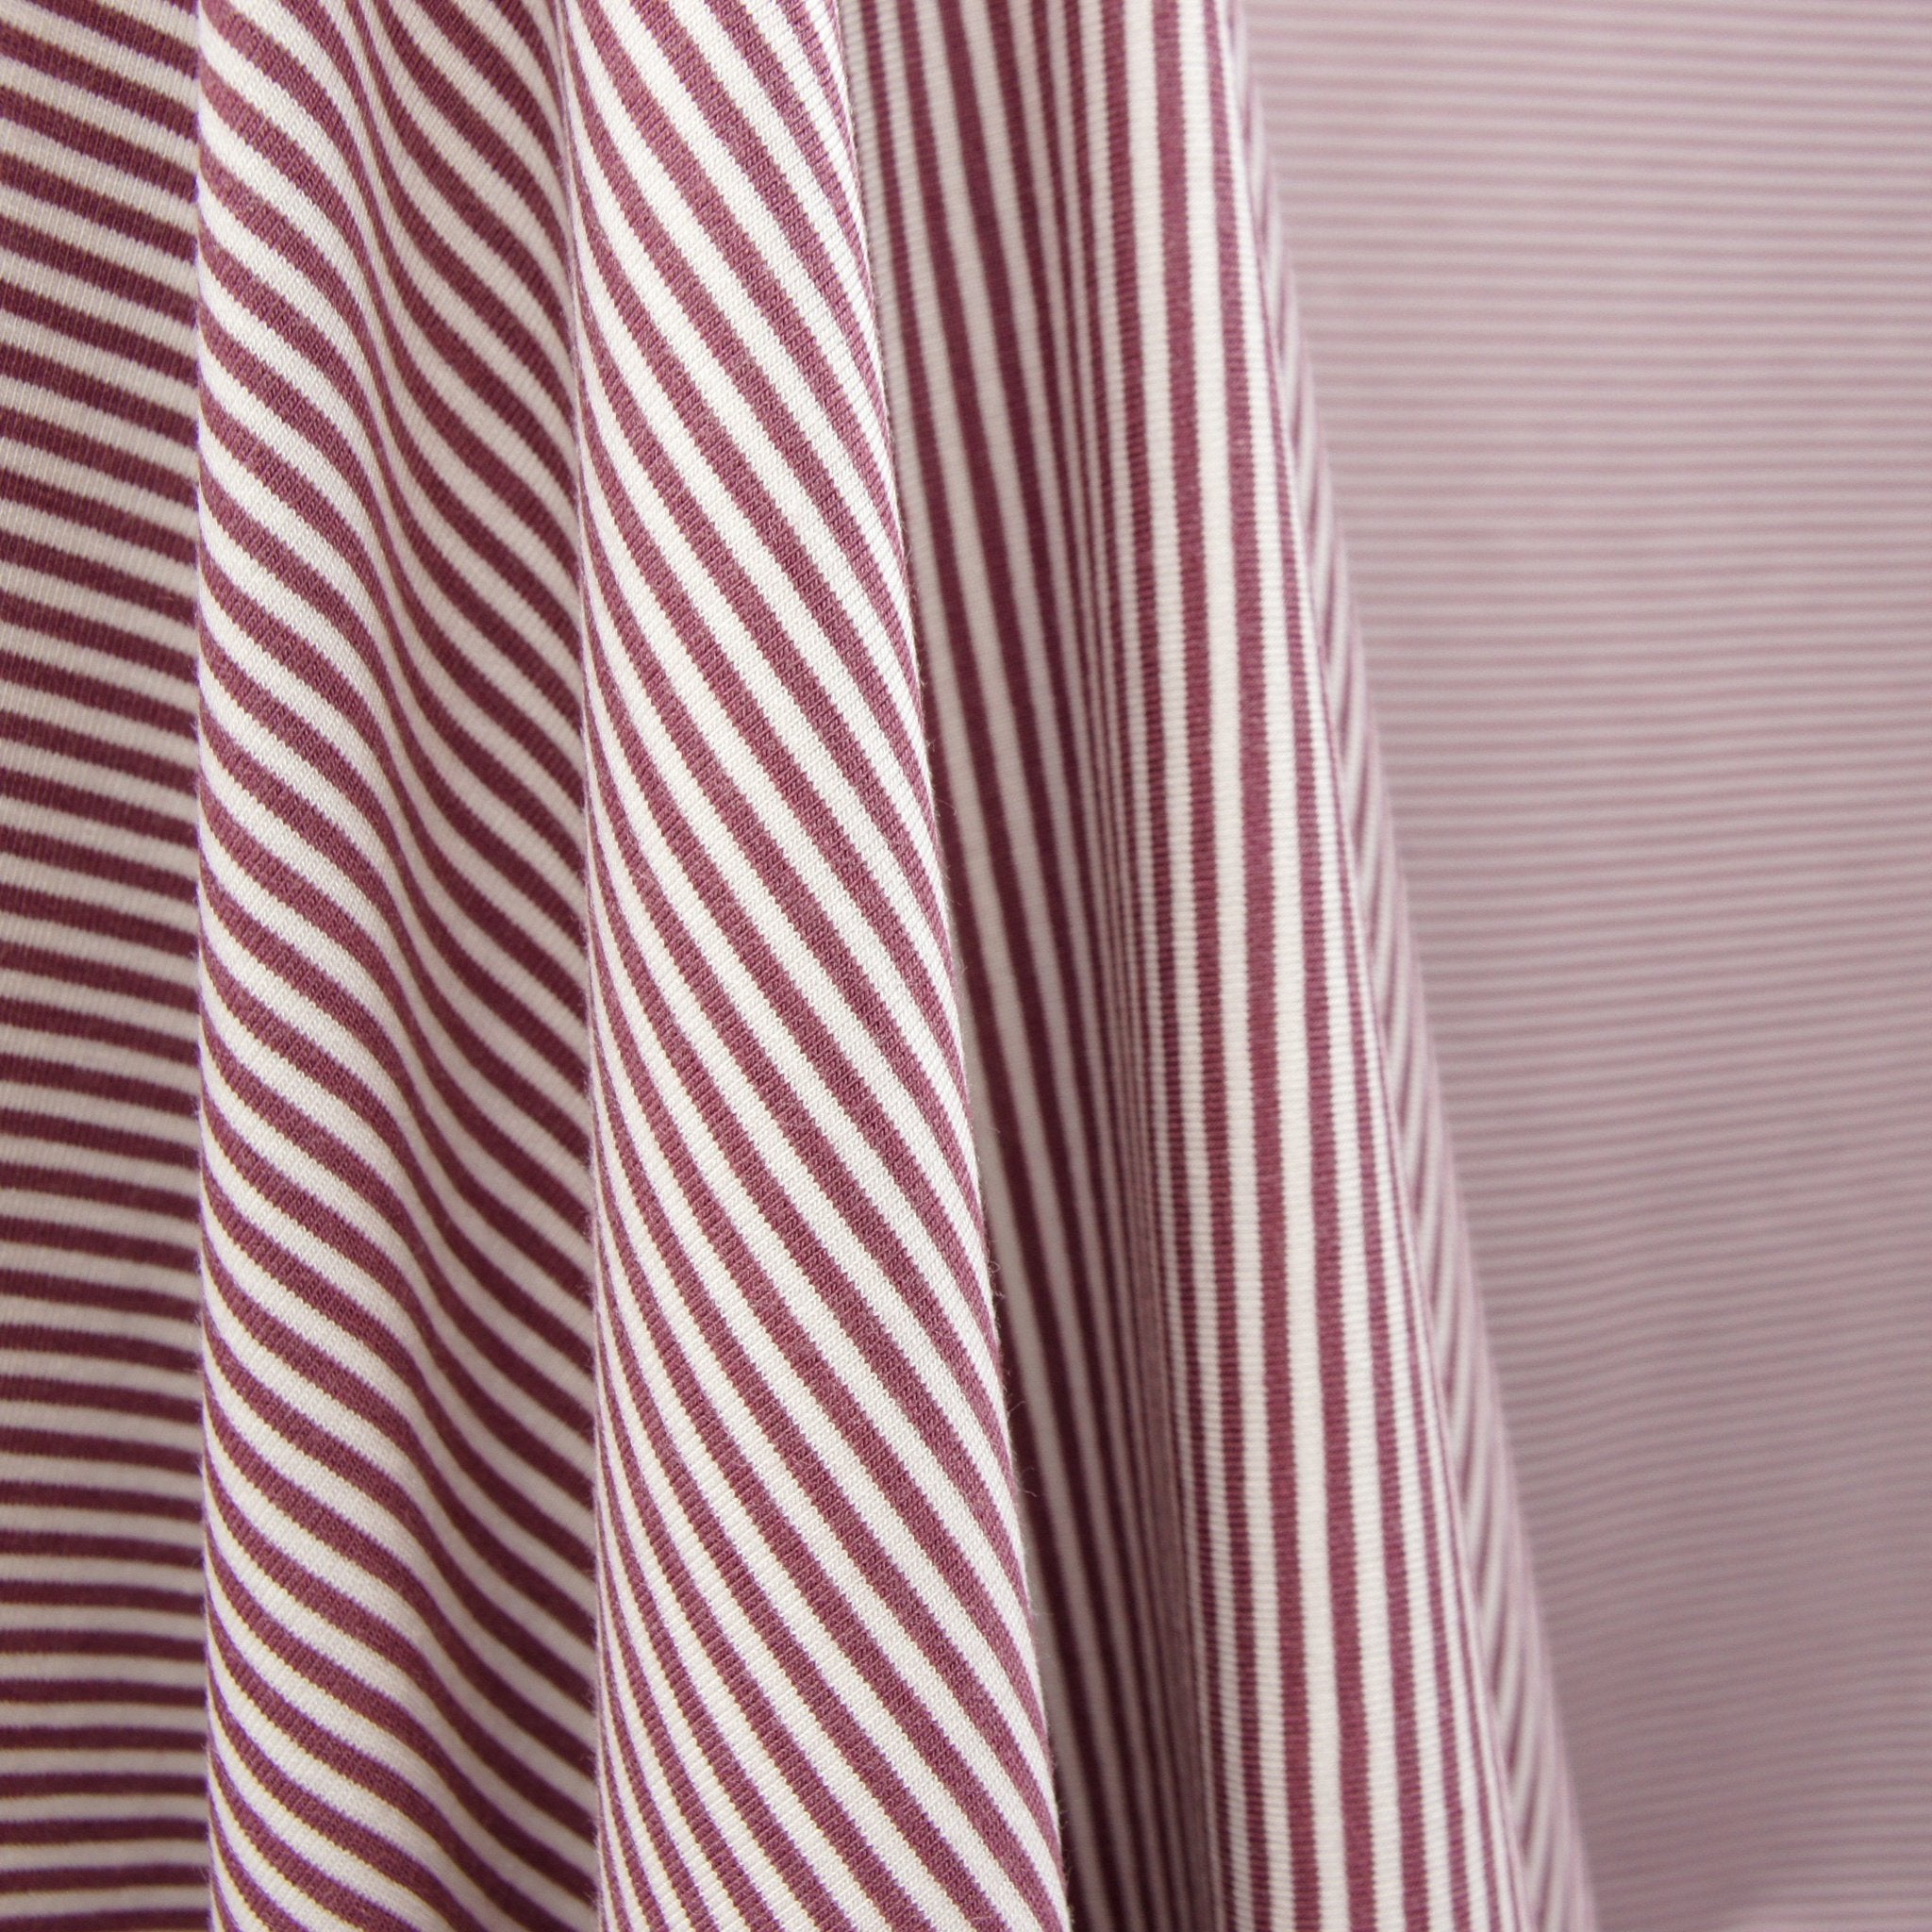 Bamboo Organic Cotton Spandex Jersey - Rose Brown White 2mm Stripes - Knit - Earth Indigo